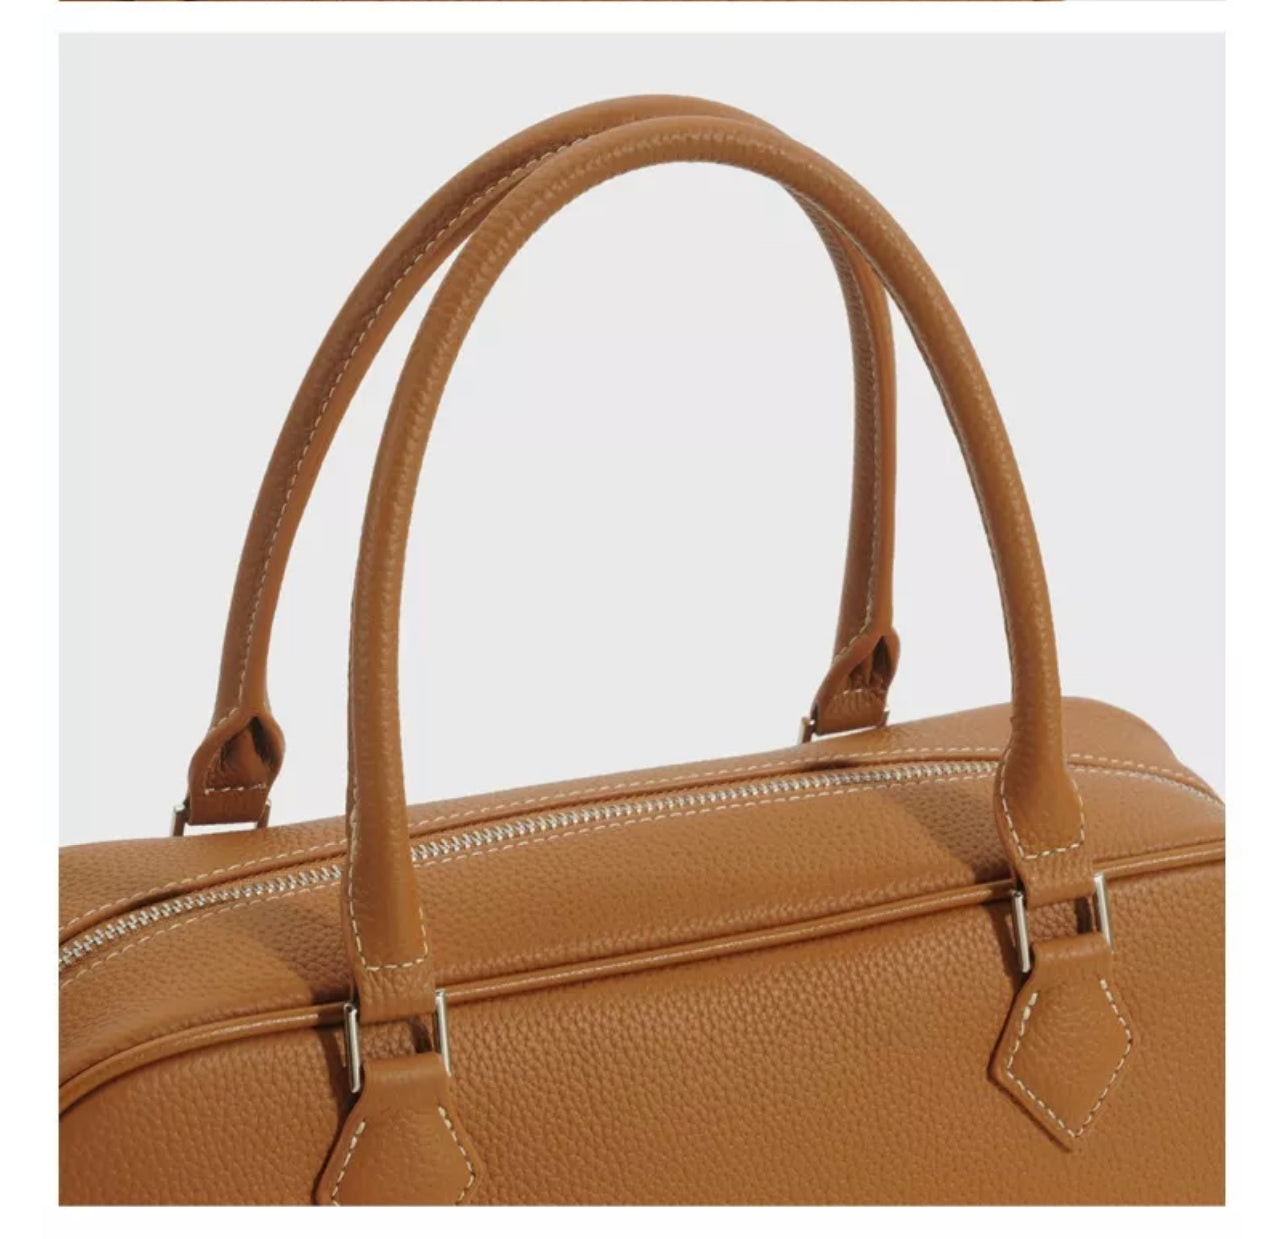 Plume Leather Bag